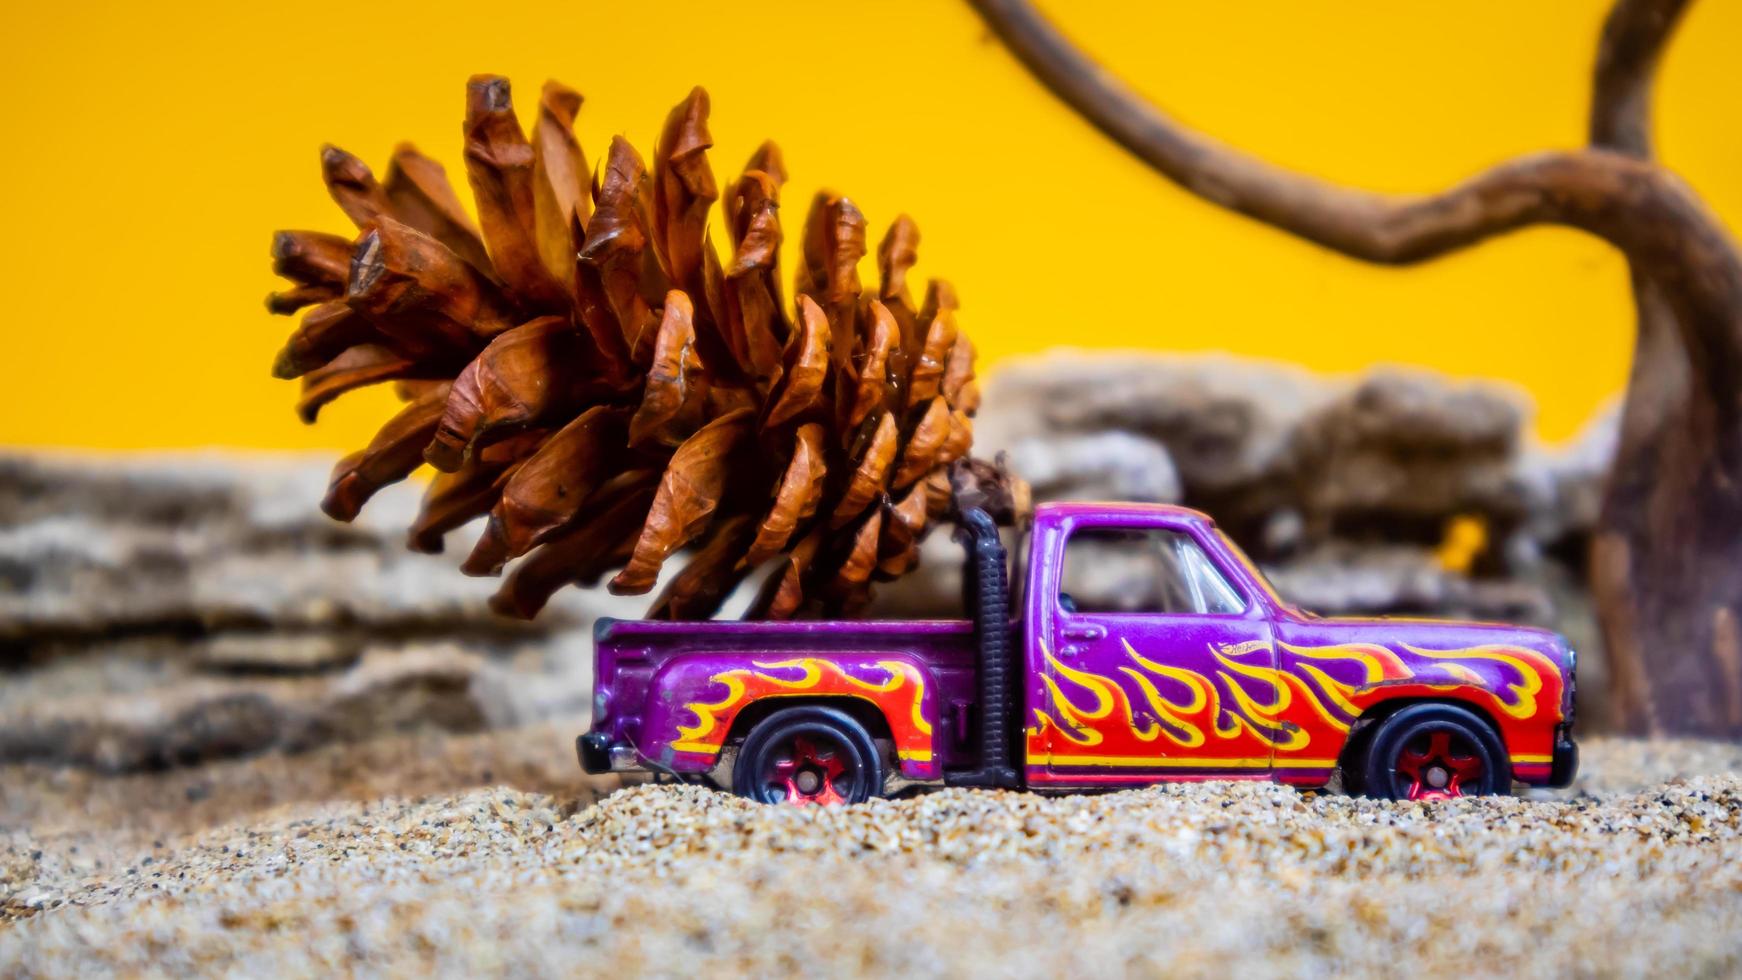 toy car hauling pinecones on an orange background photo